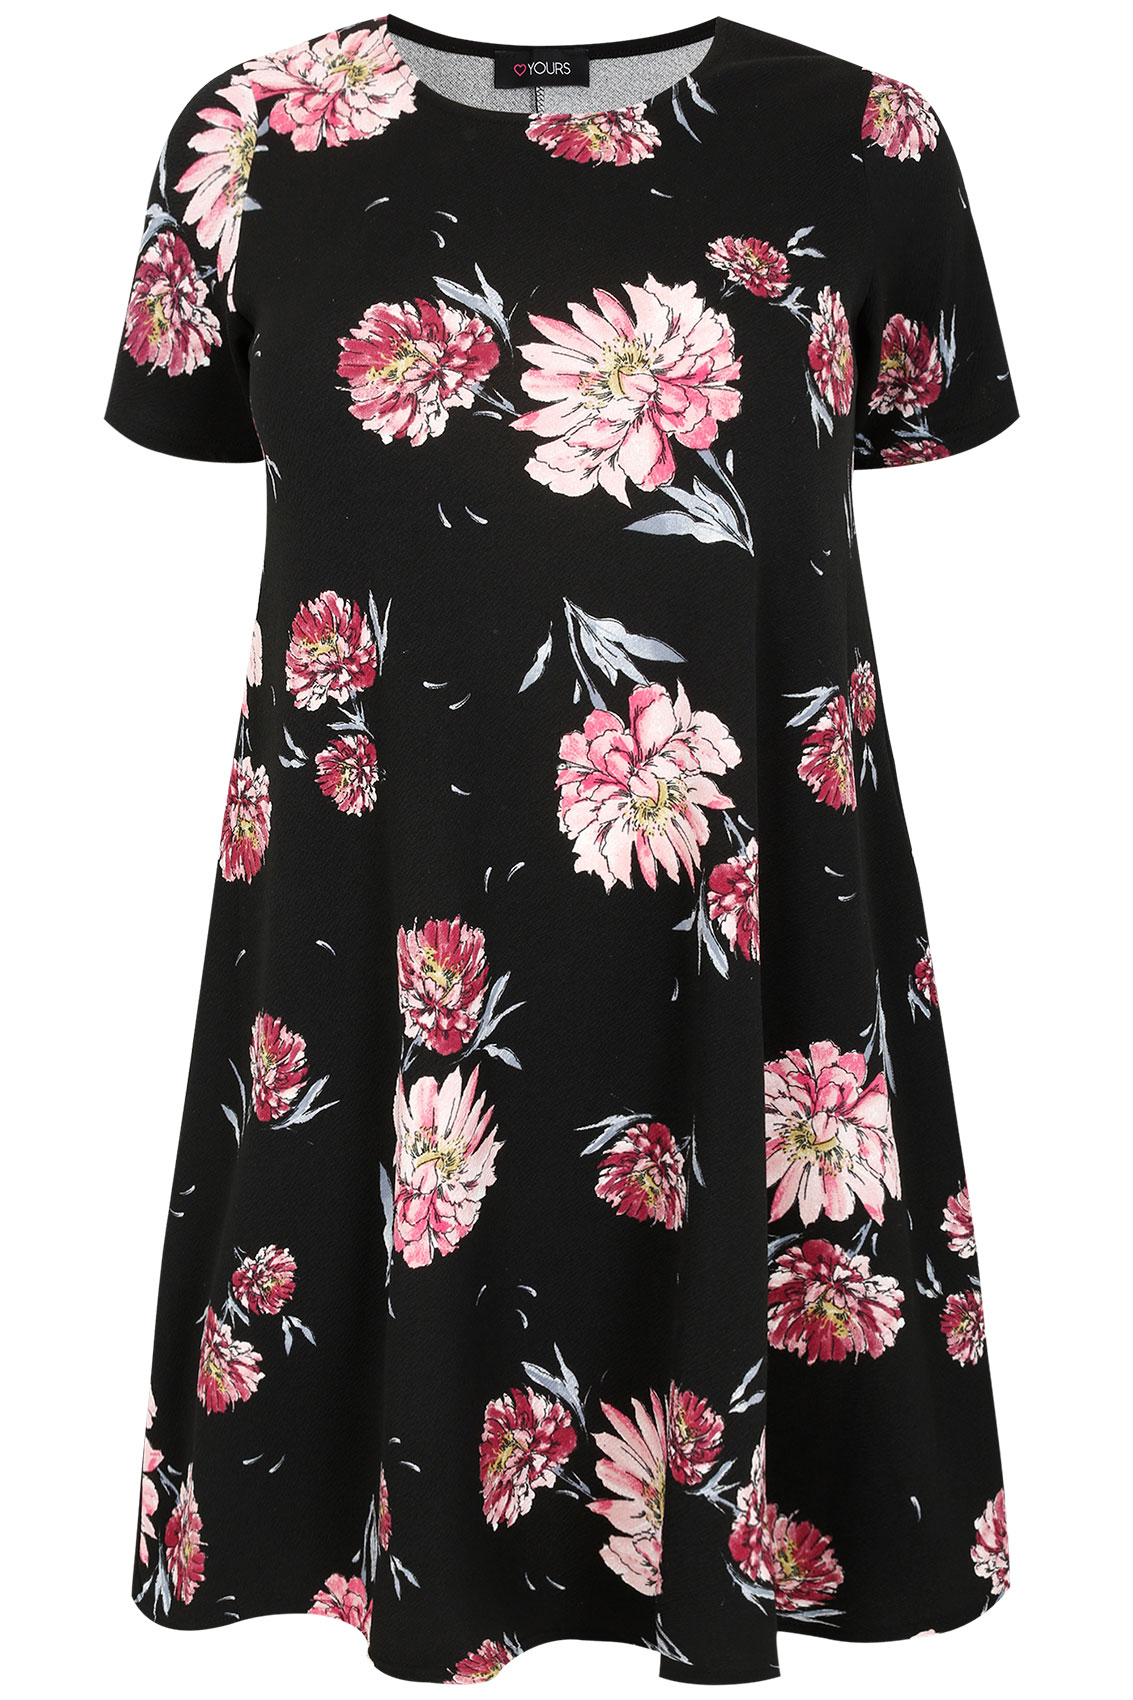 Black & Multi Floral Print Swing Dress, Plus Size 16 to 36